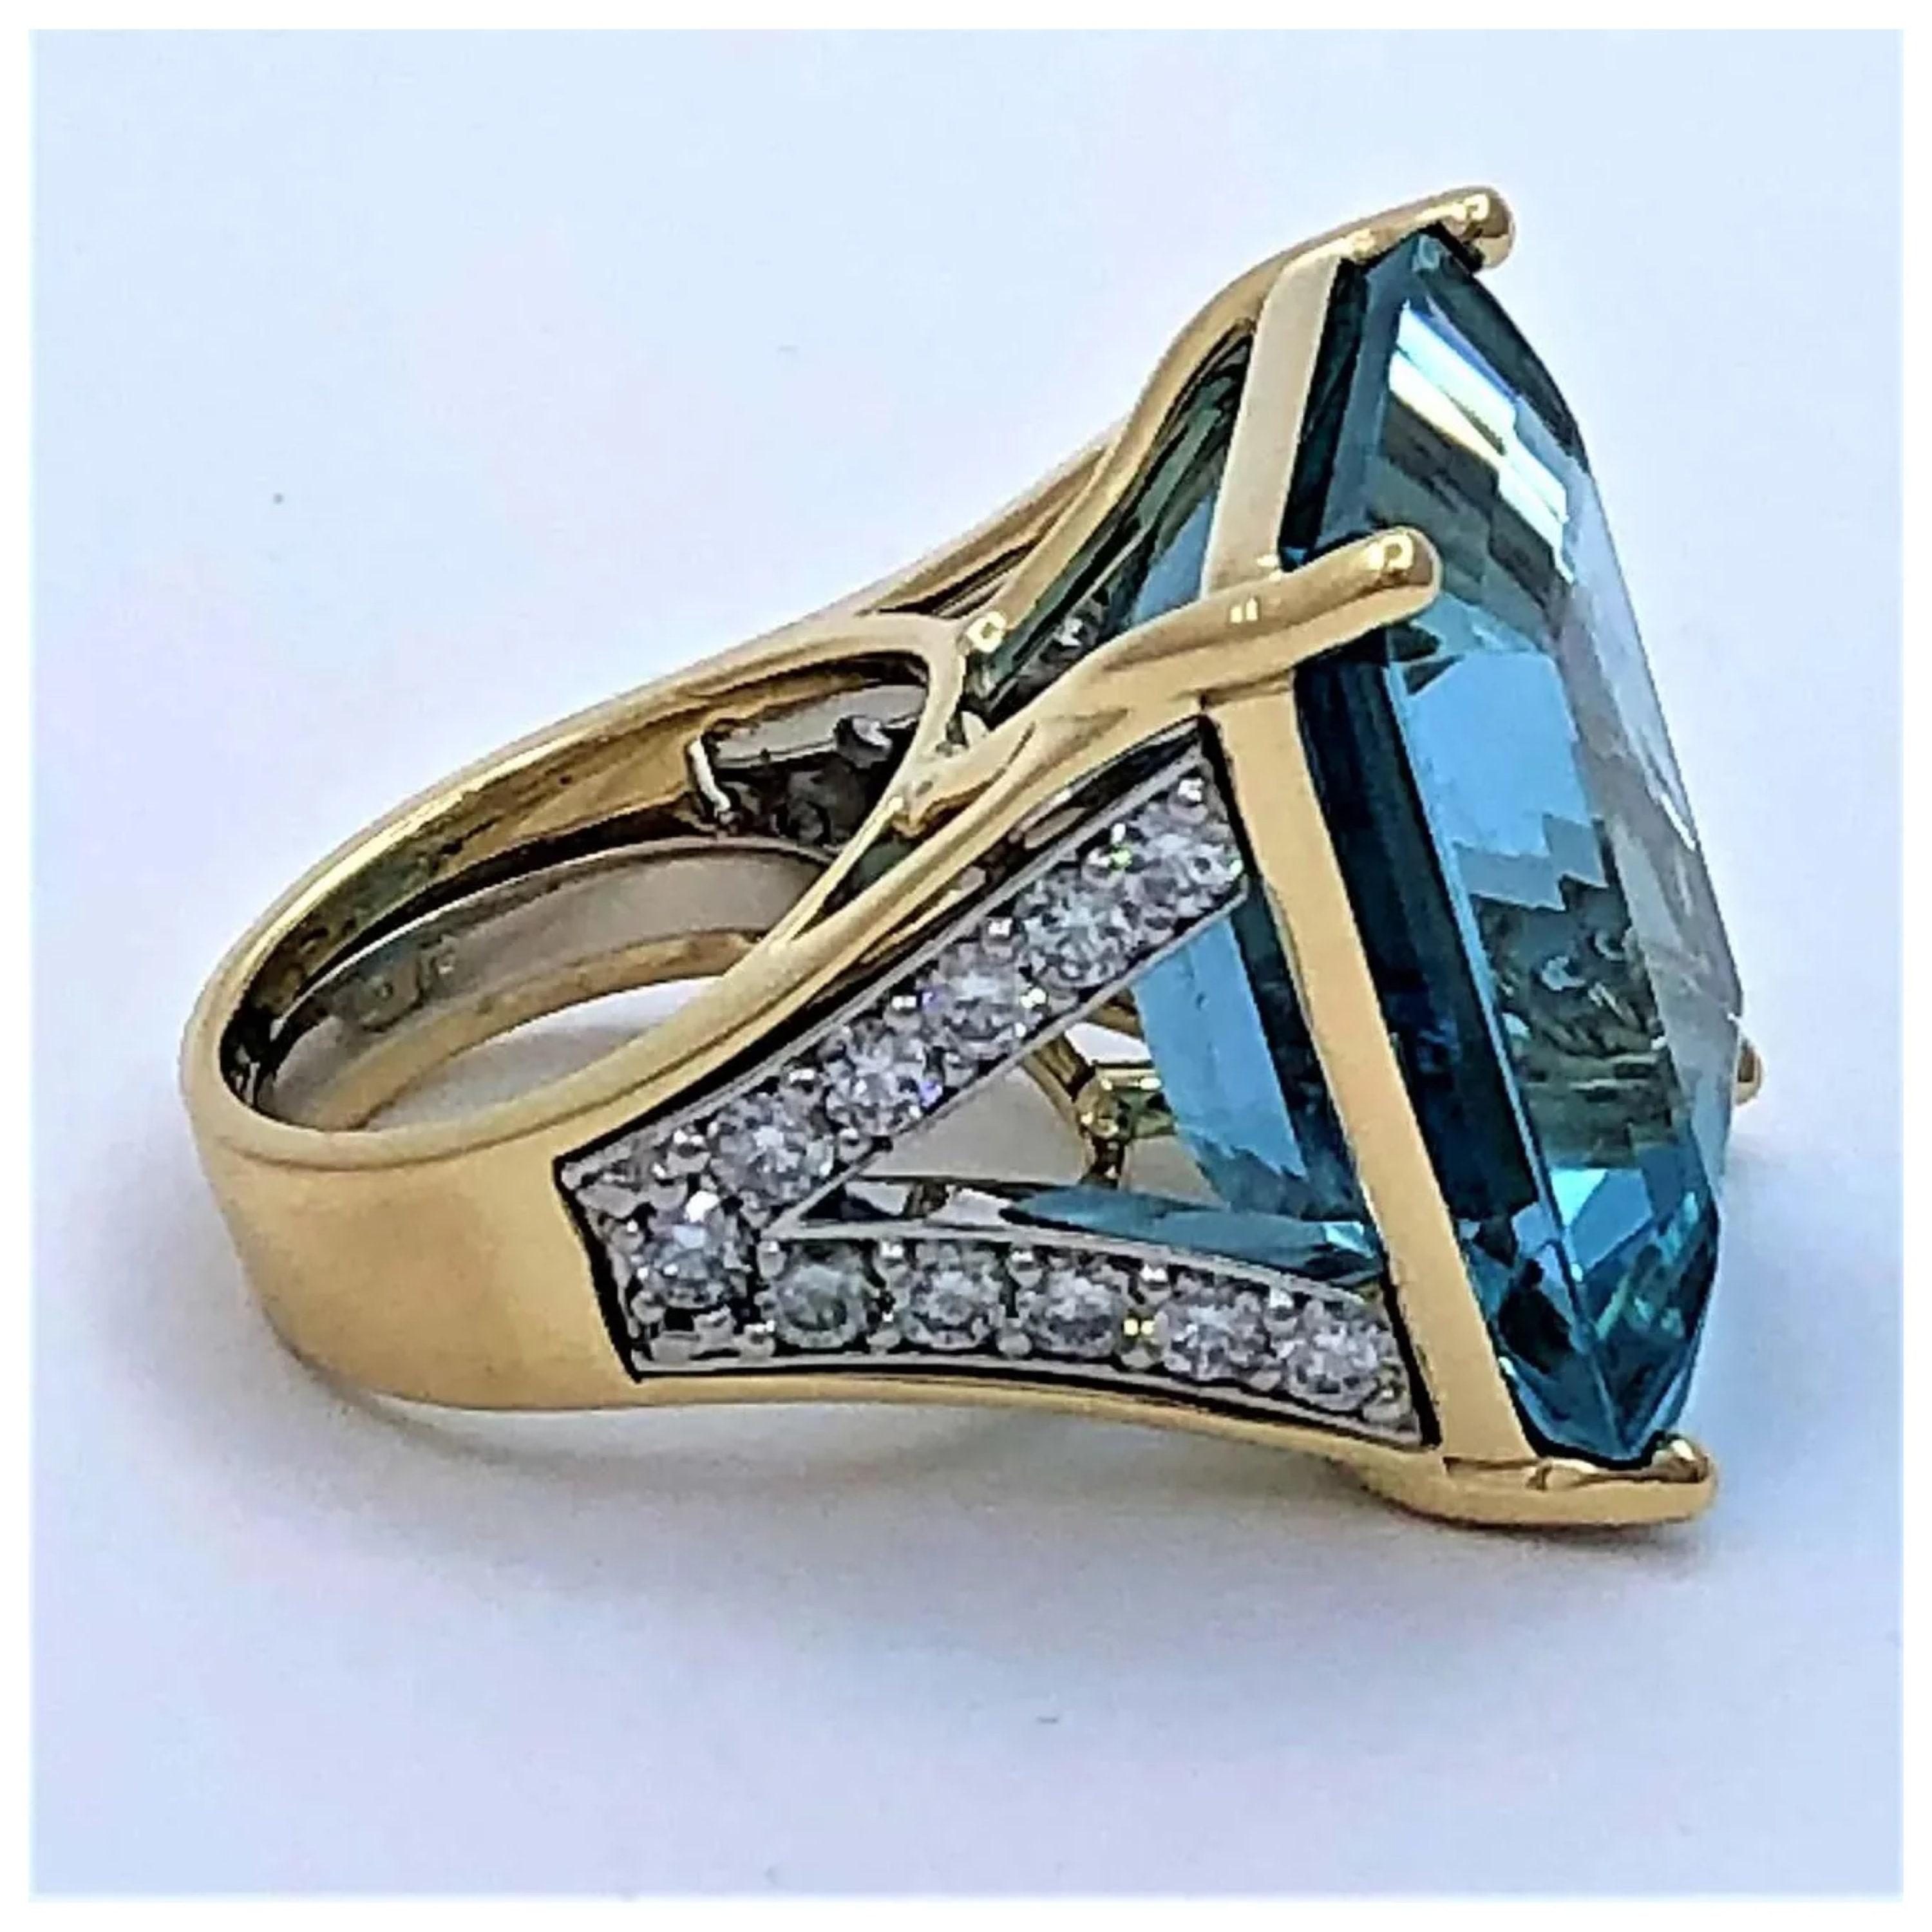 For Sale:  3.99 Carat Natural Emerald Cut Aquamarine Diamond Engagement Ring Cocktail Ring 2